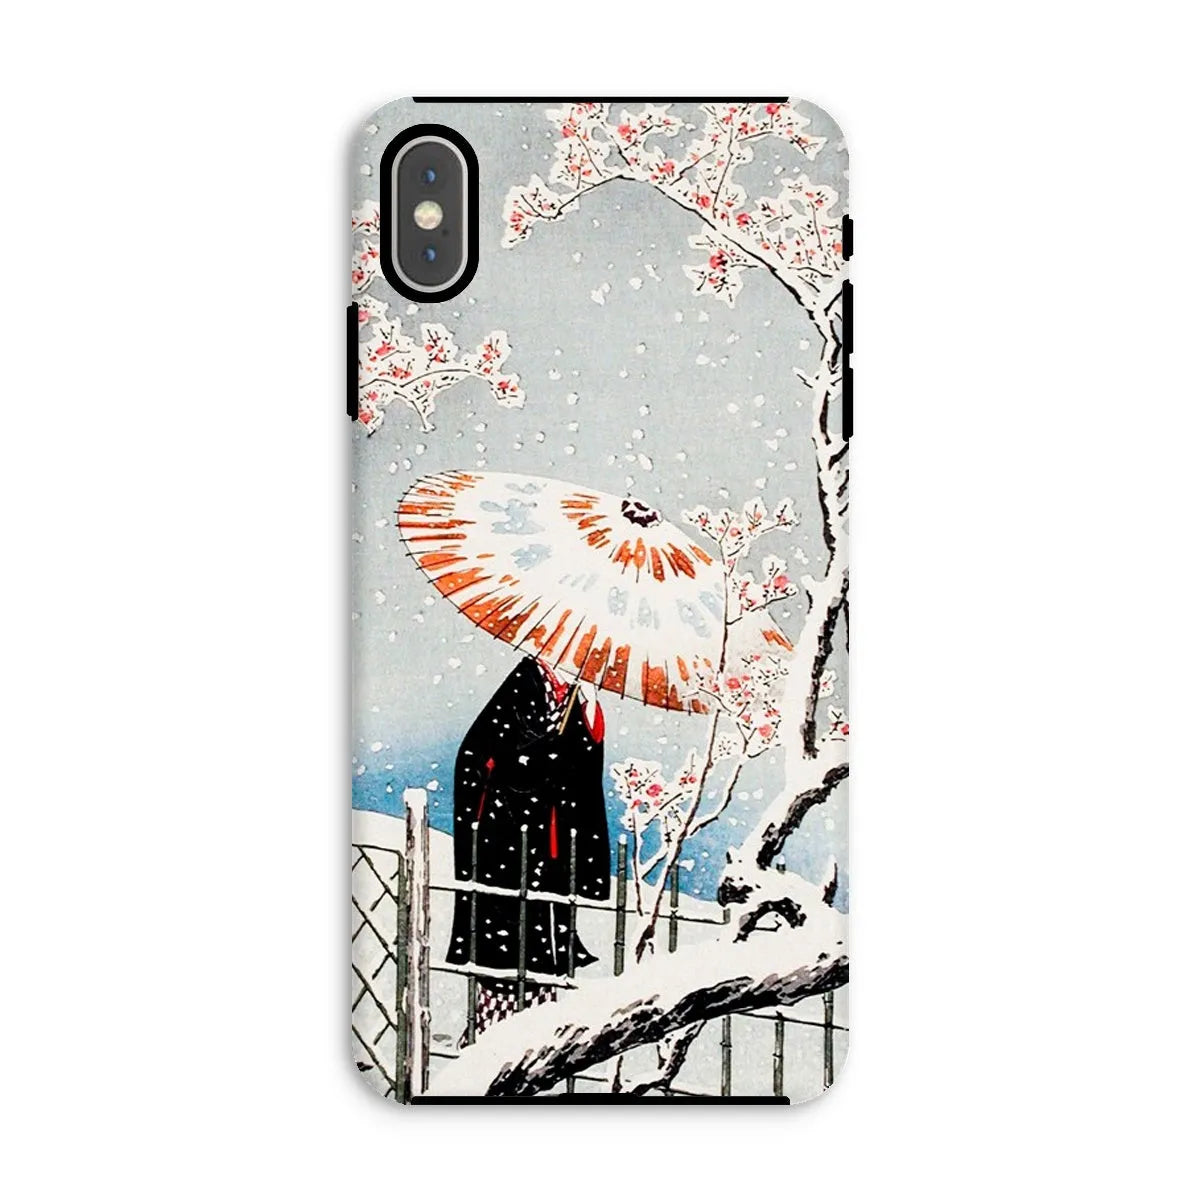 Plum Tree In Snow - Shin-hanga Phone Case - Hiroaki Takahashi - Iphone Xs Max / Matte - Mobile Phone Cases - Aesthetic